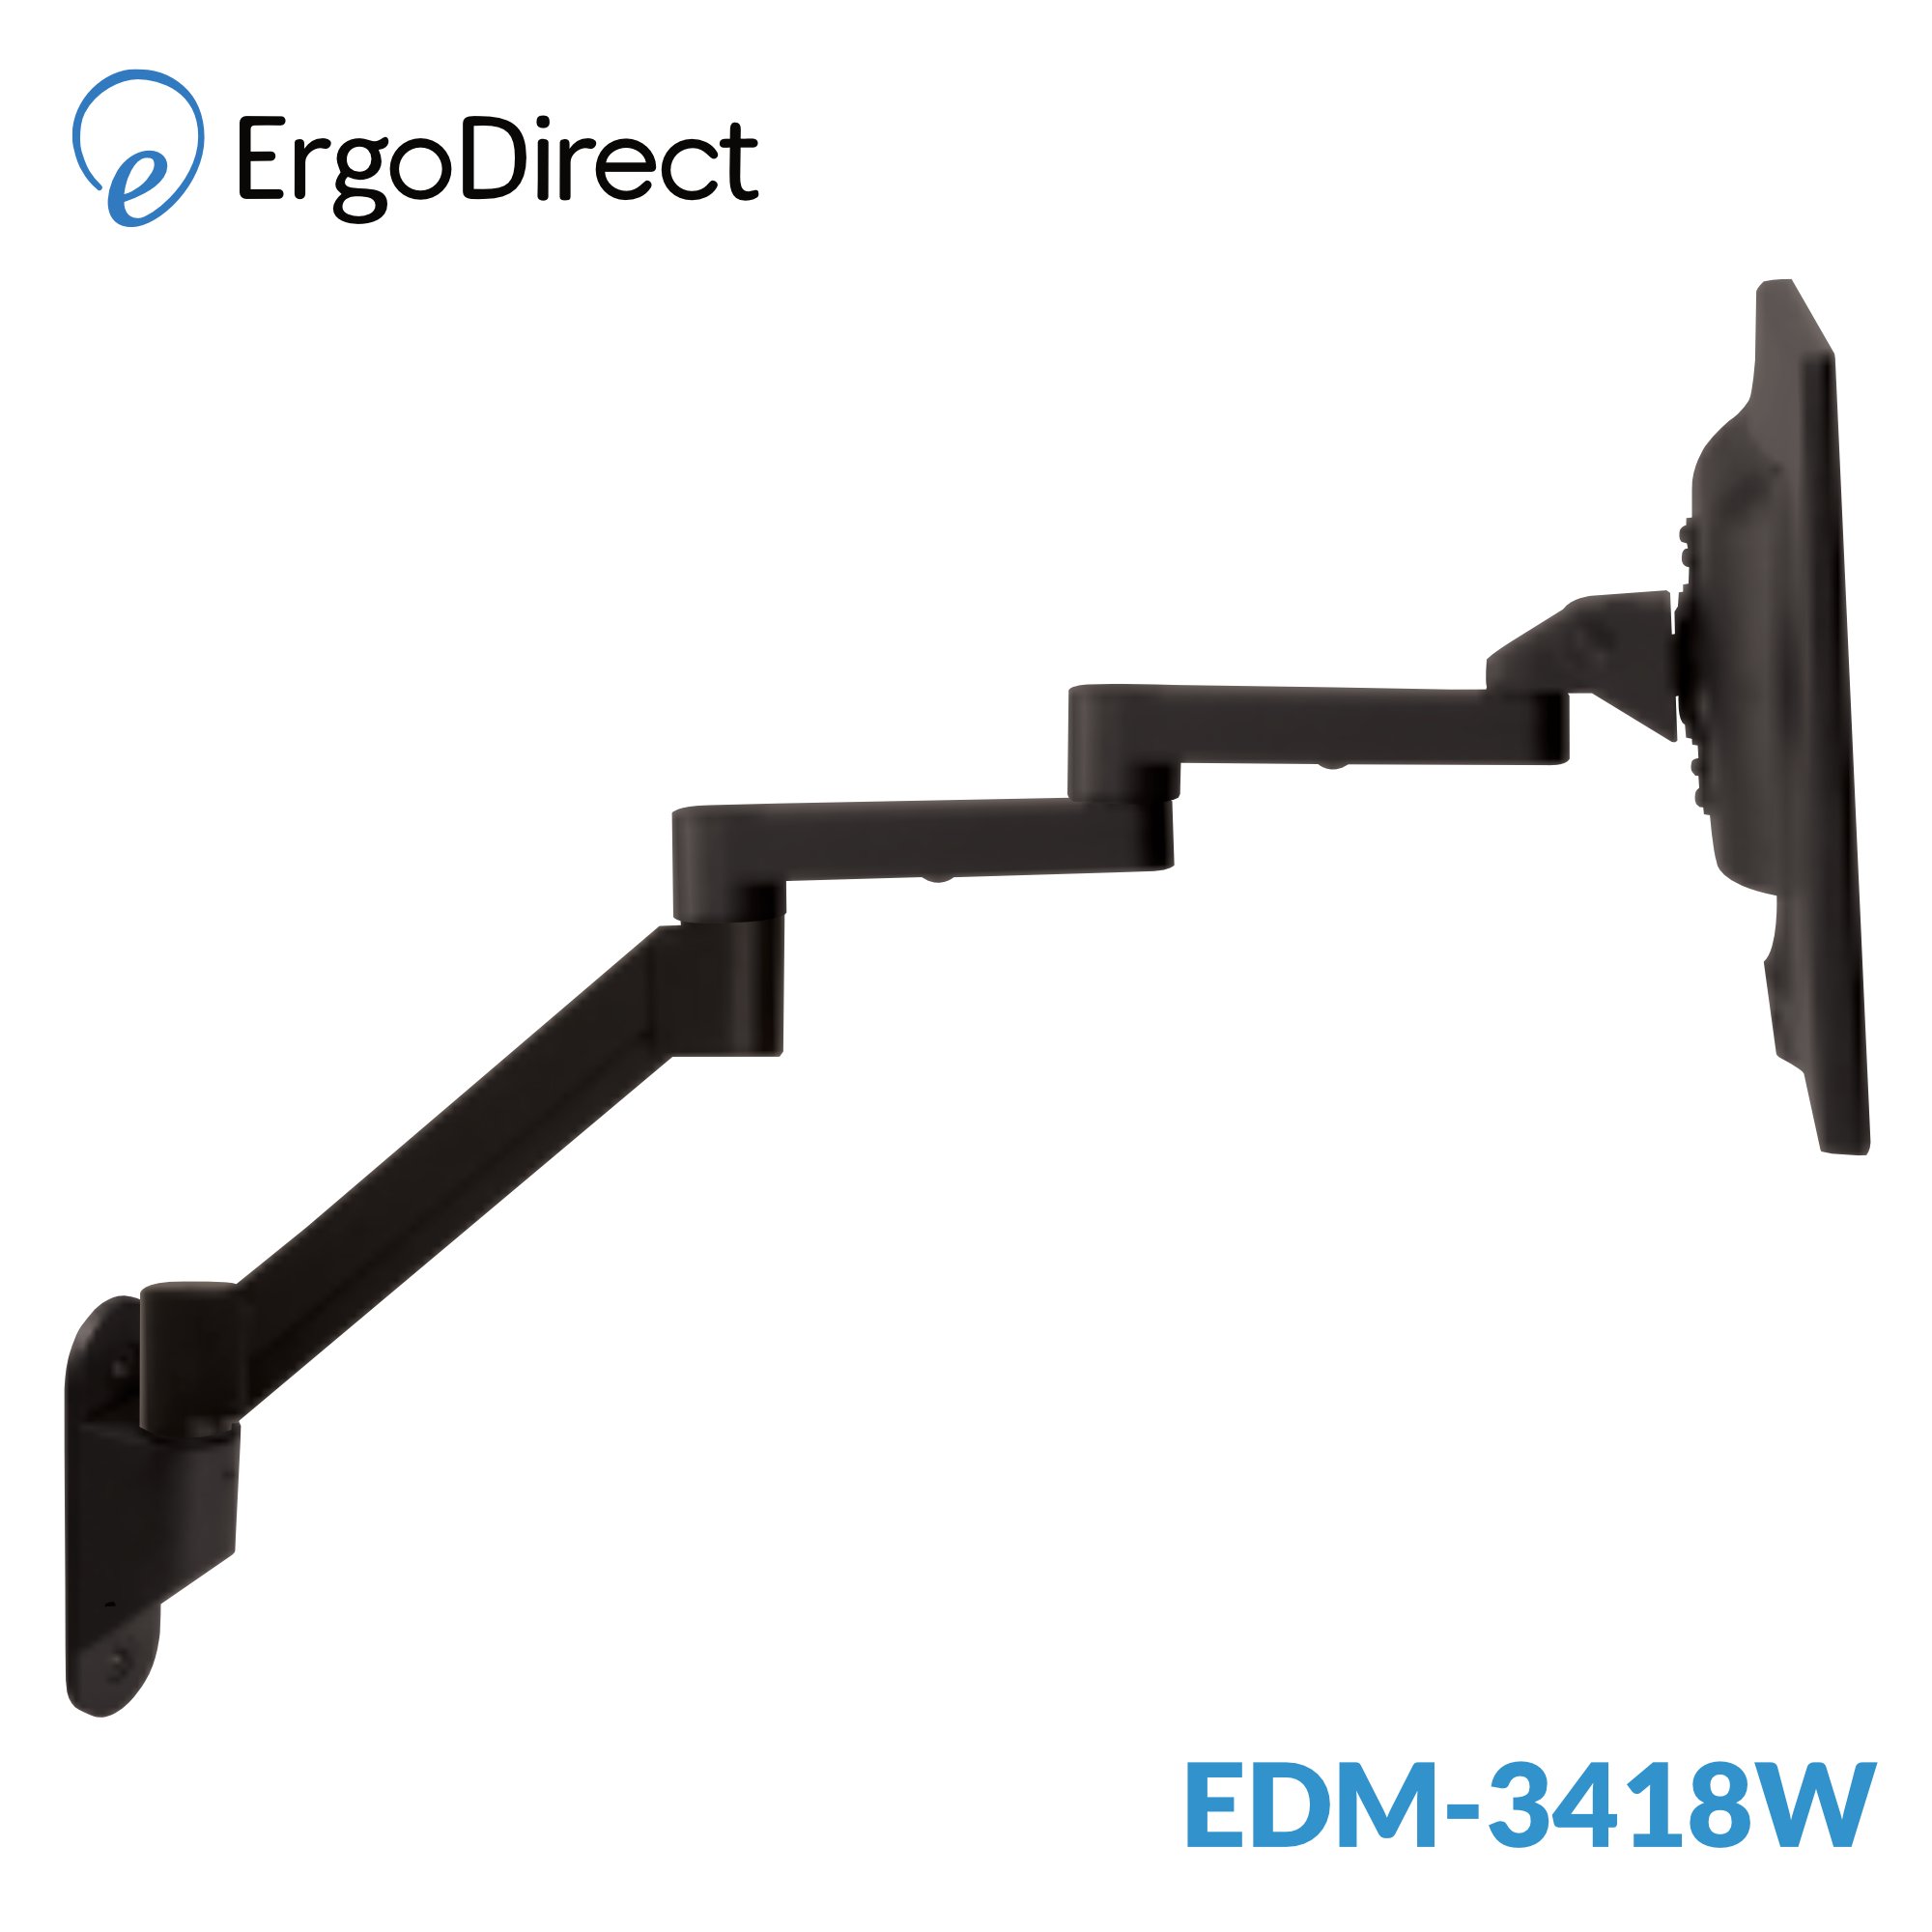 ErgoDirect EDM-3418W Long Reach Wall Mount Monitor Arm